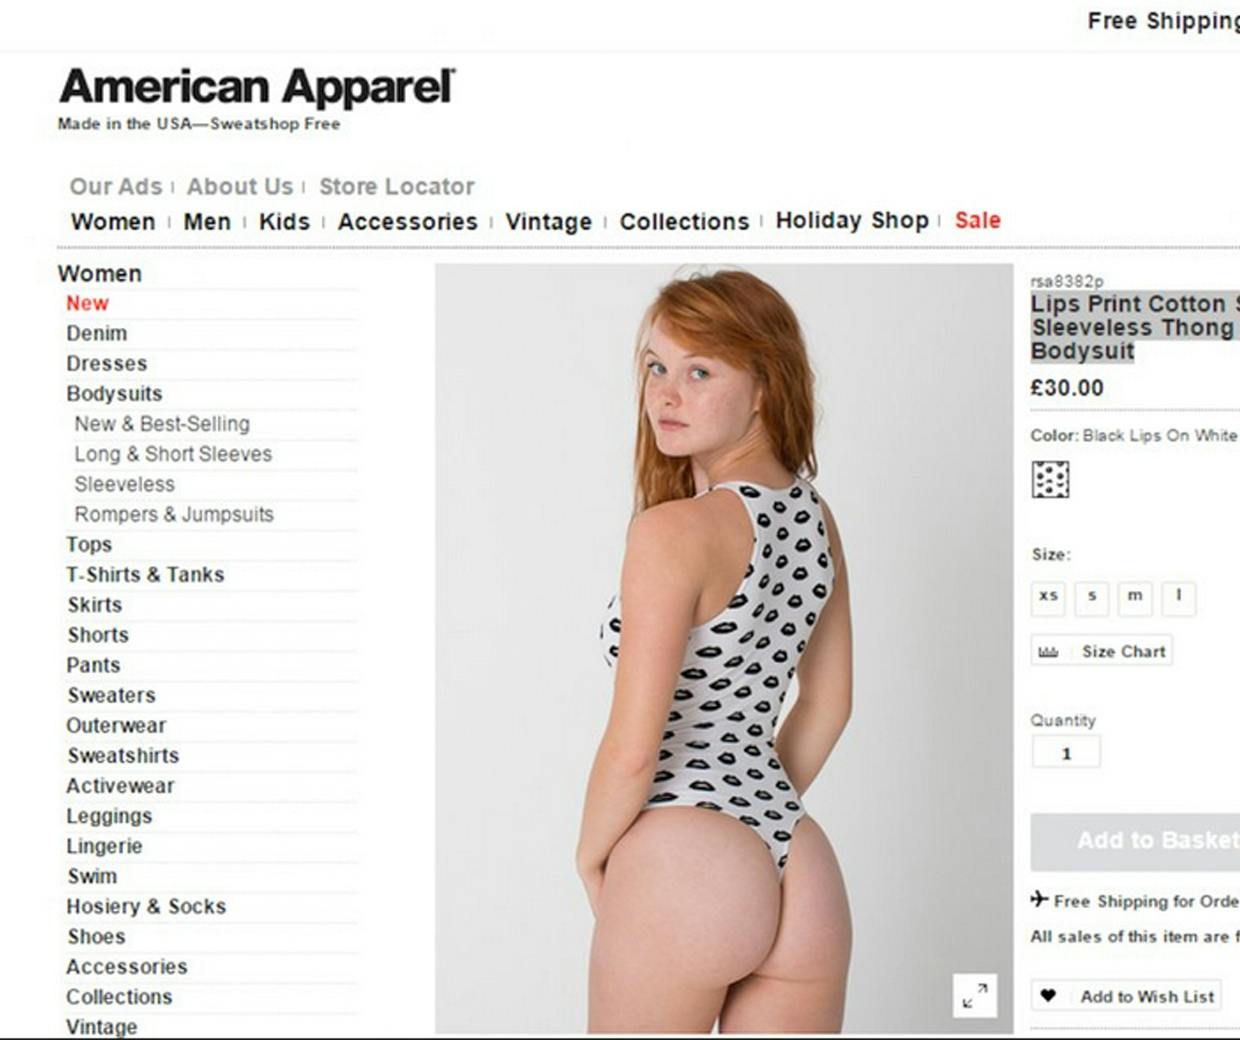 american apparel sexist ads